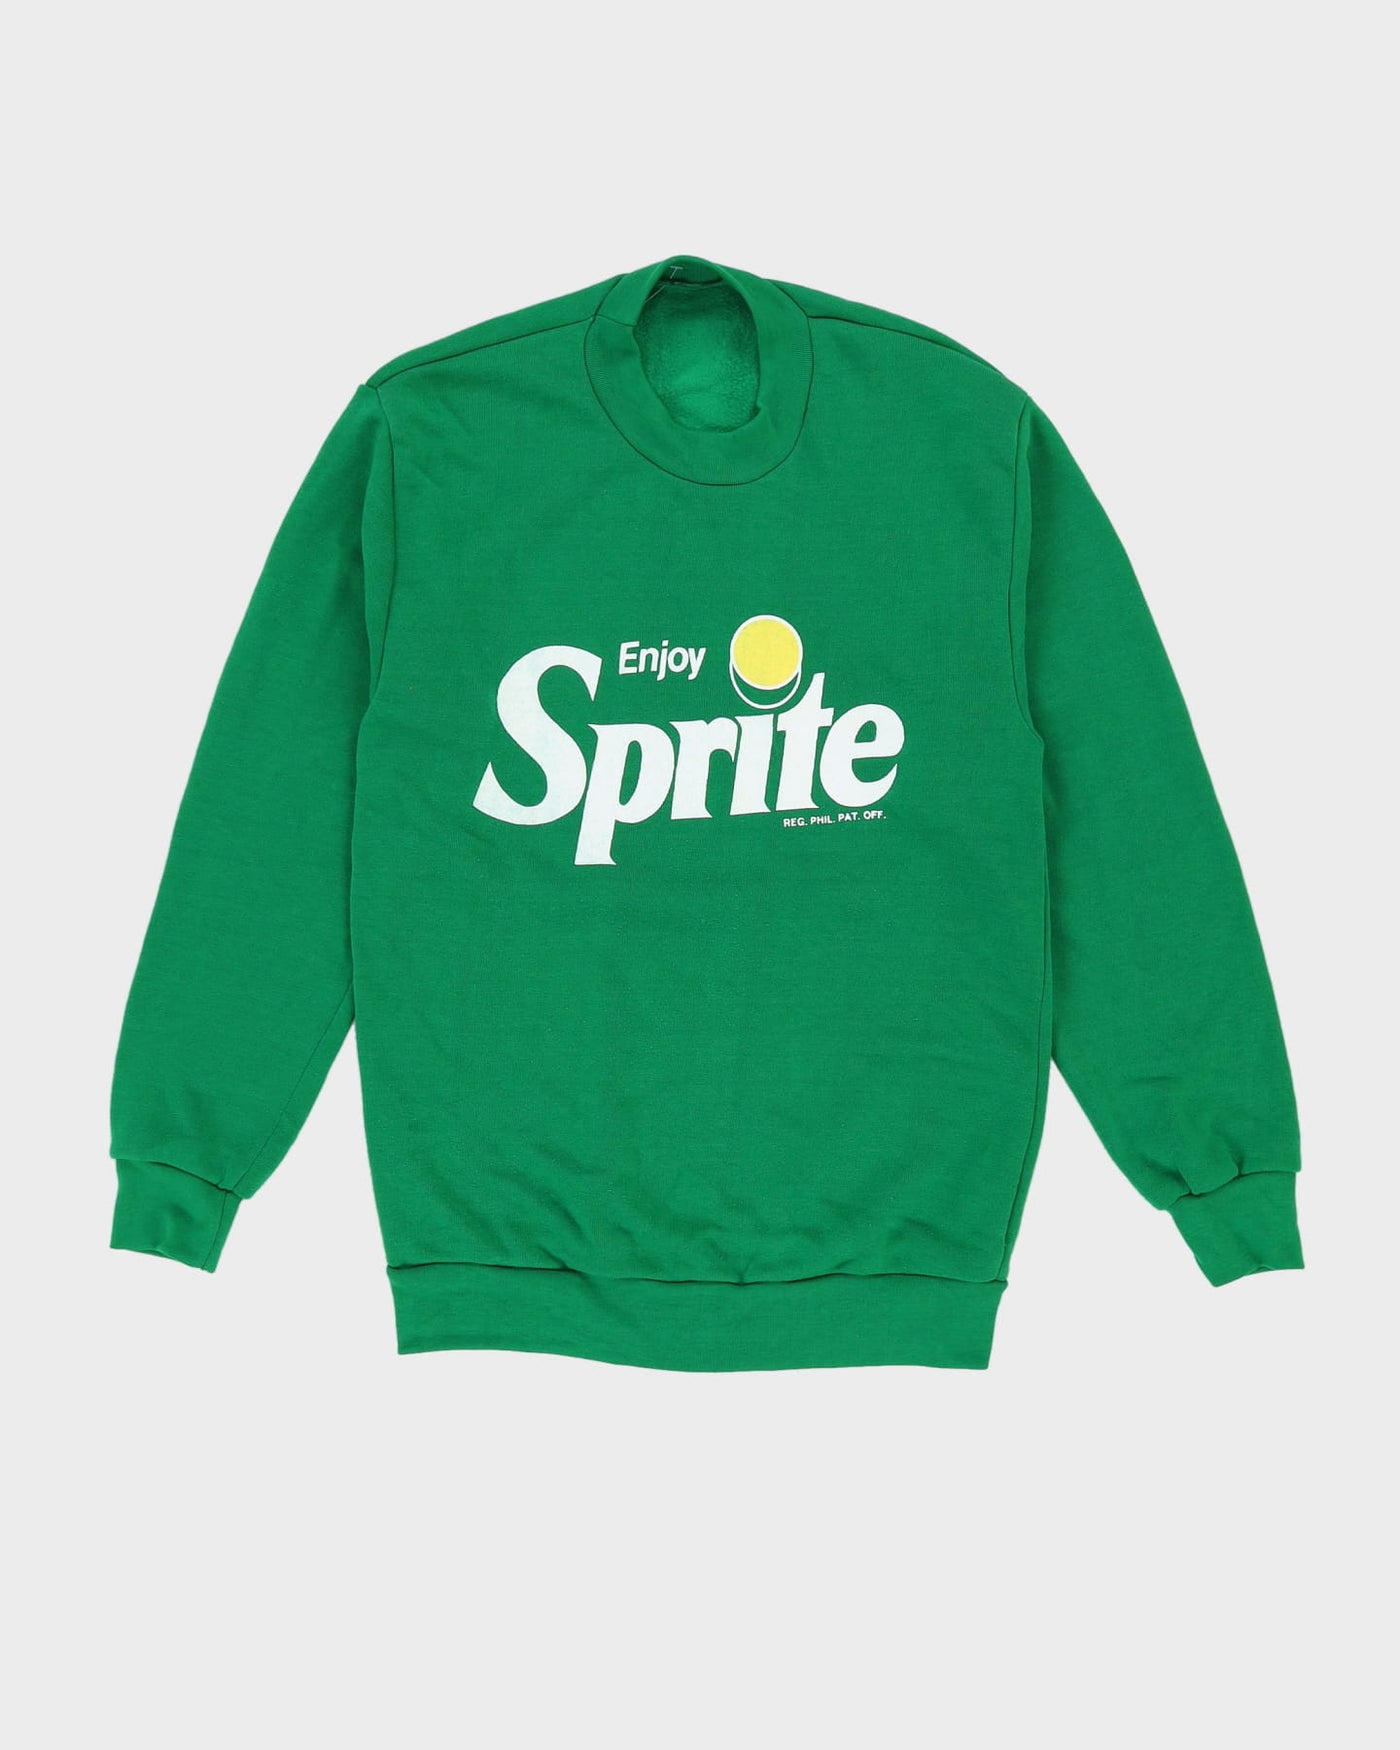 Vintage Early 90s Sprite Green Logo Sweatshirt - S